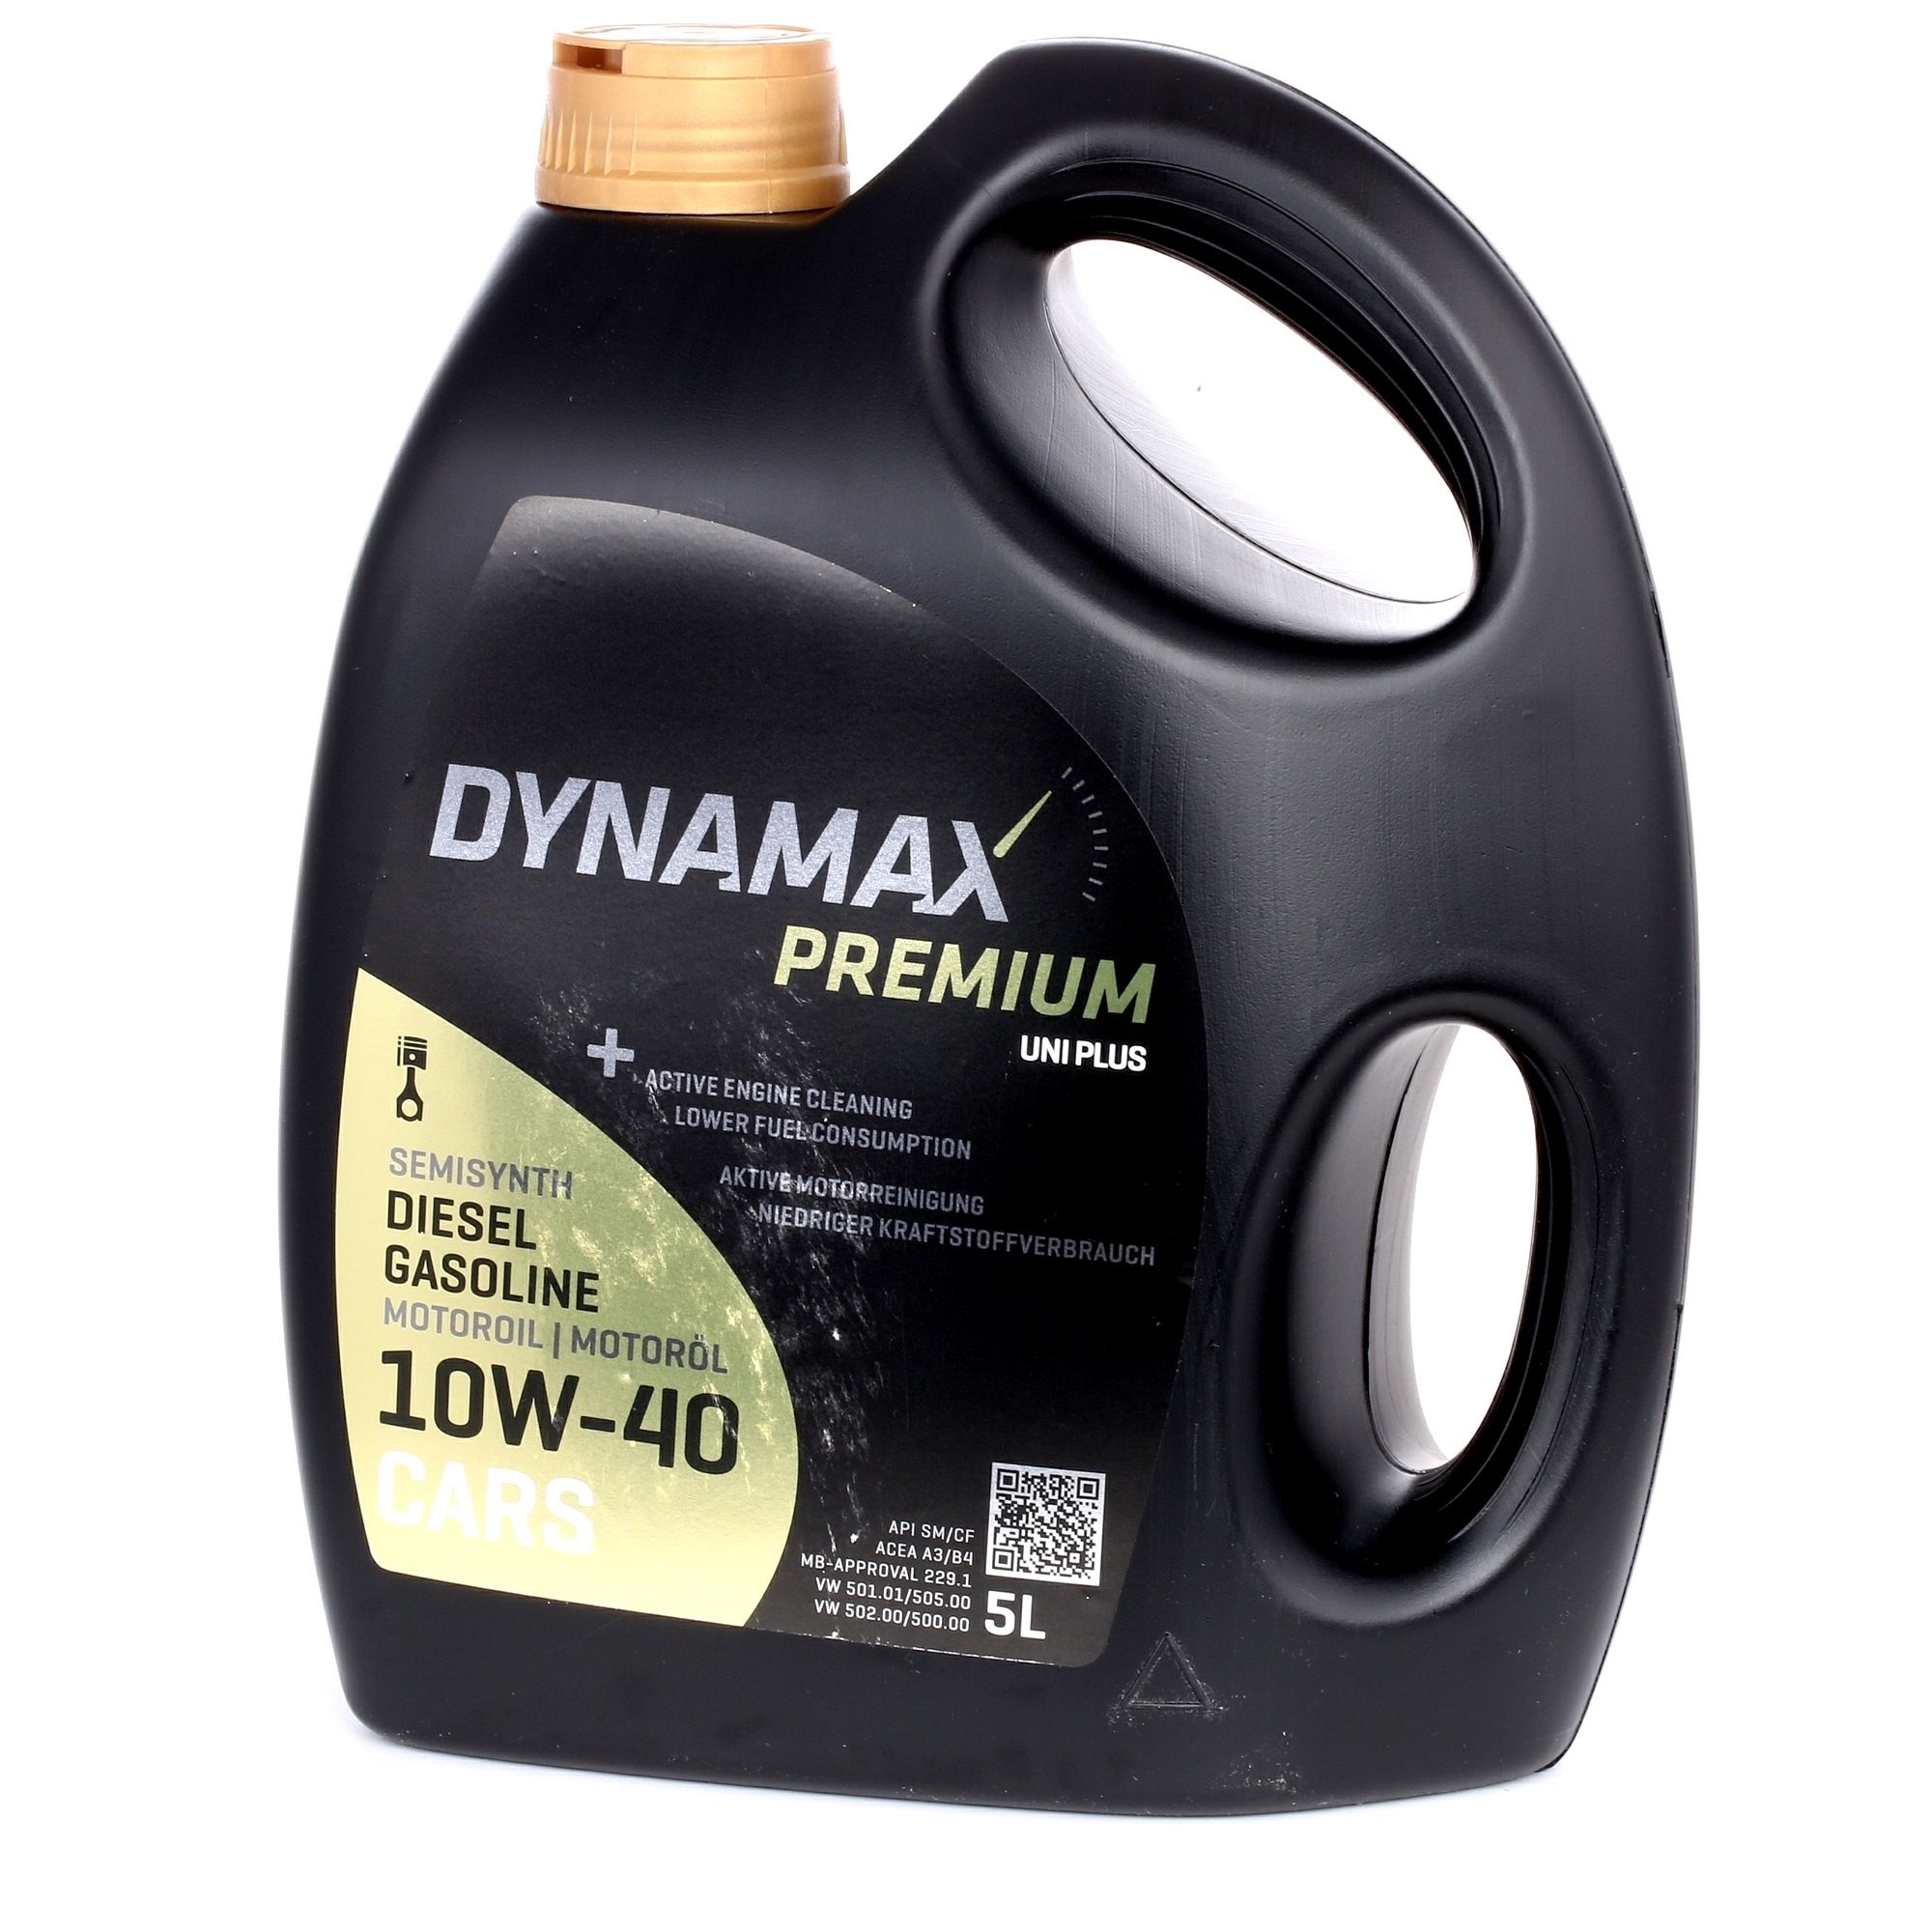 DYNAMAX Premium, Uni Plus 501962 HARLEY-DAVIDSON Mopo Moottoriöljy 10W-40, 5l, Osasynteettinen öljy